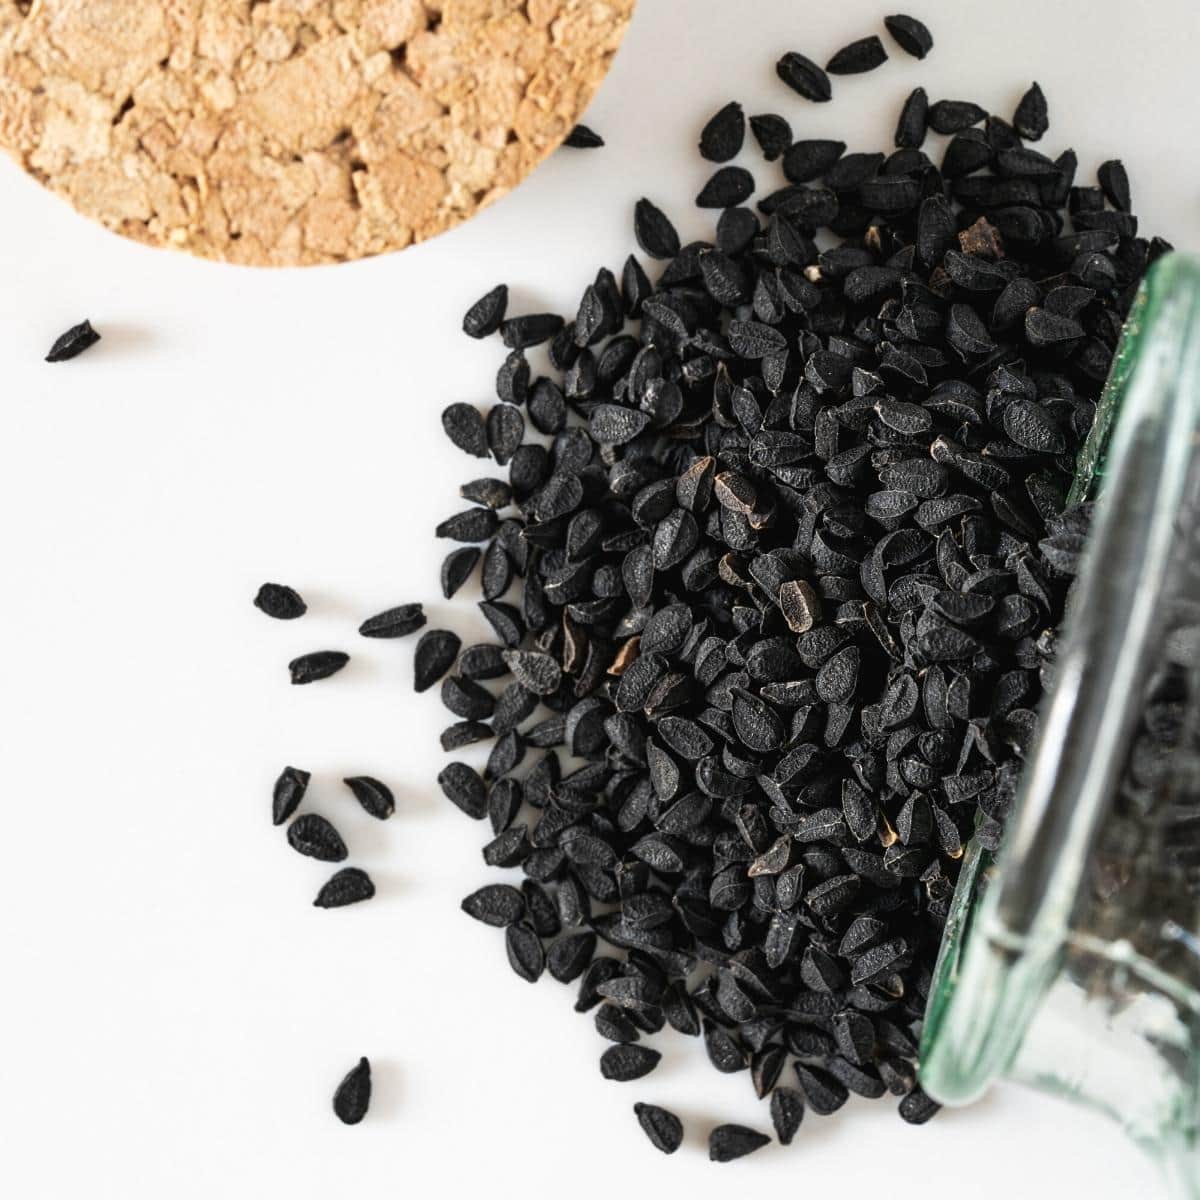 Black nigella seeds spilling out of a glass jar.